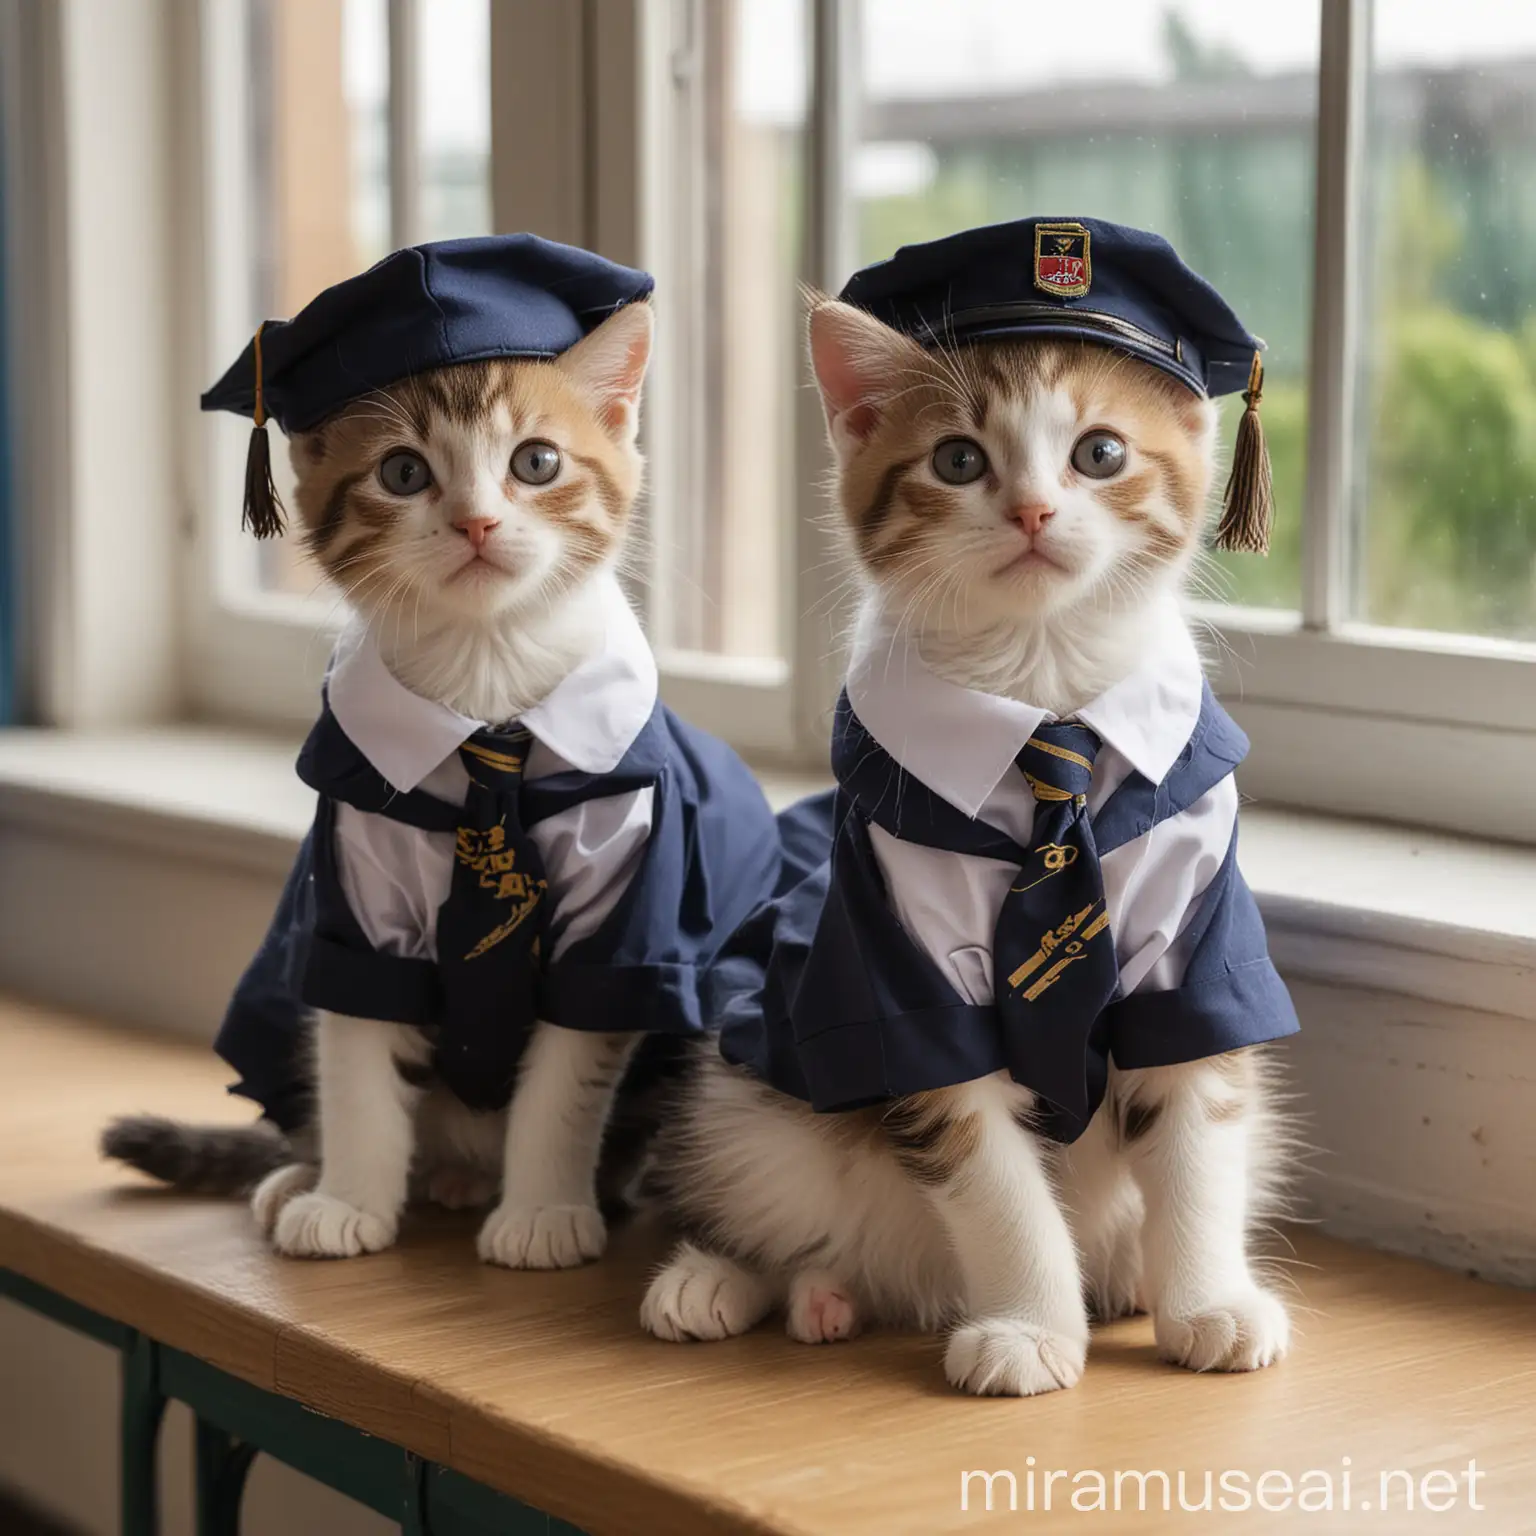 two kitten in school uniform with cap, sitting in classroom with windows open